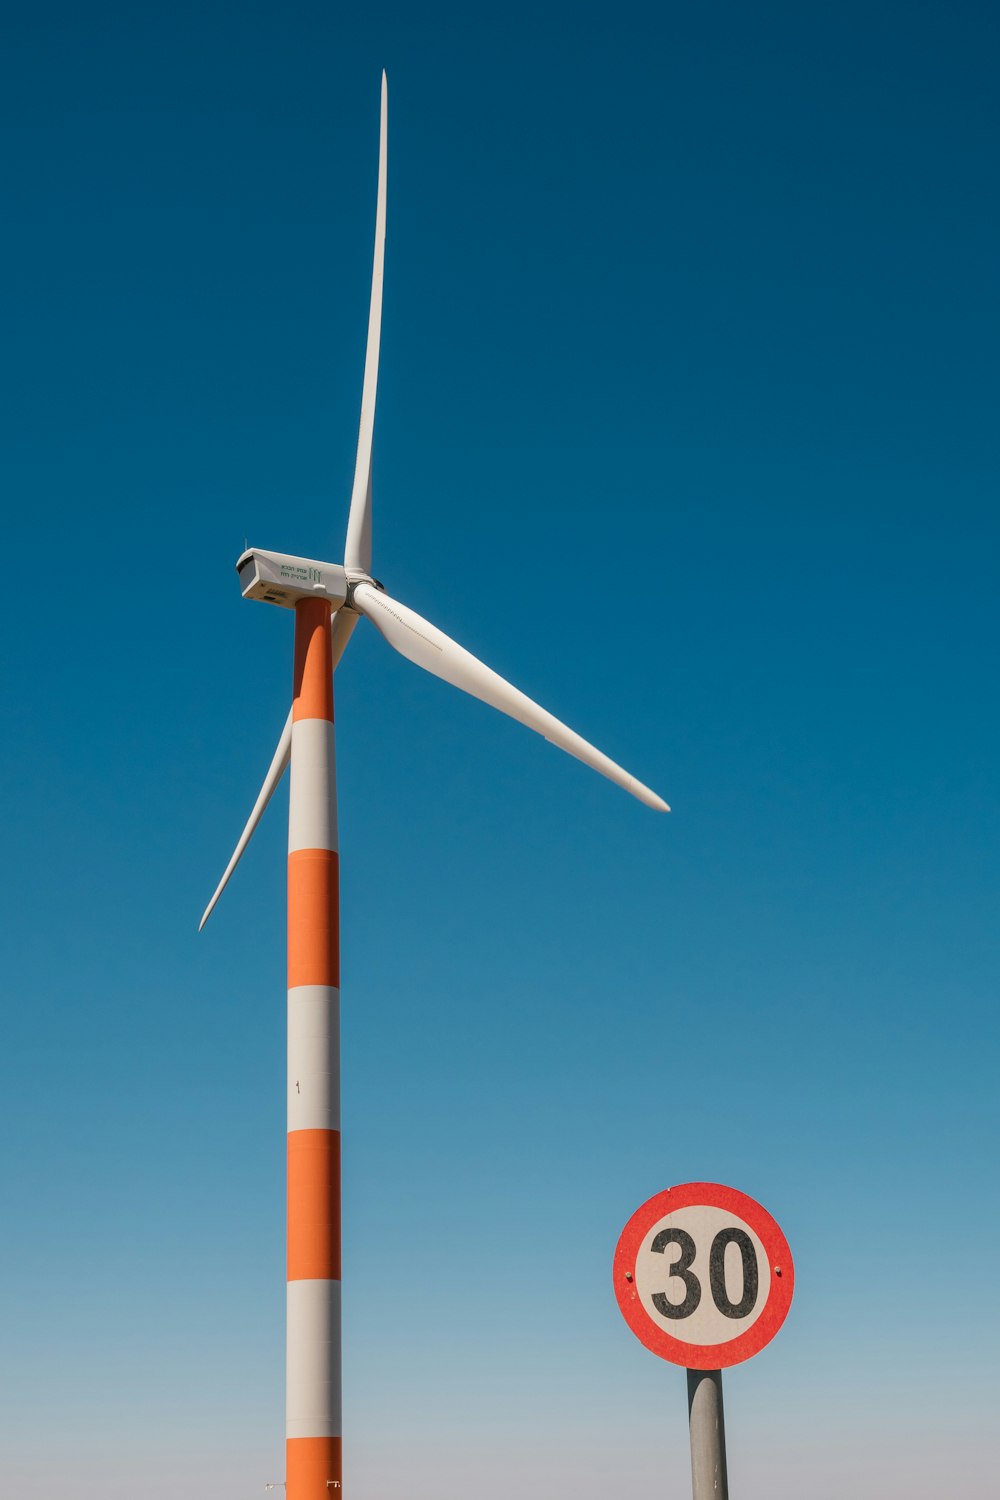 a wind turbine next to a speed limit sign